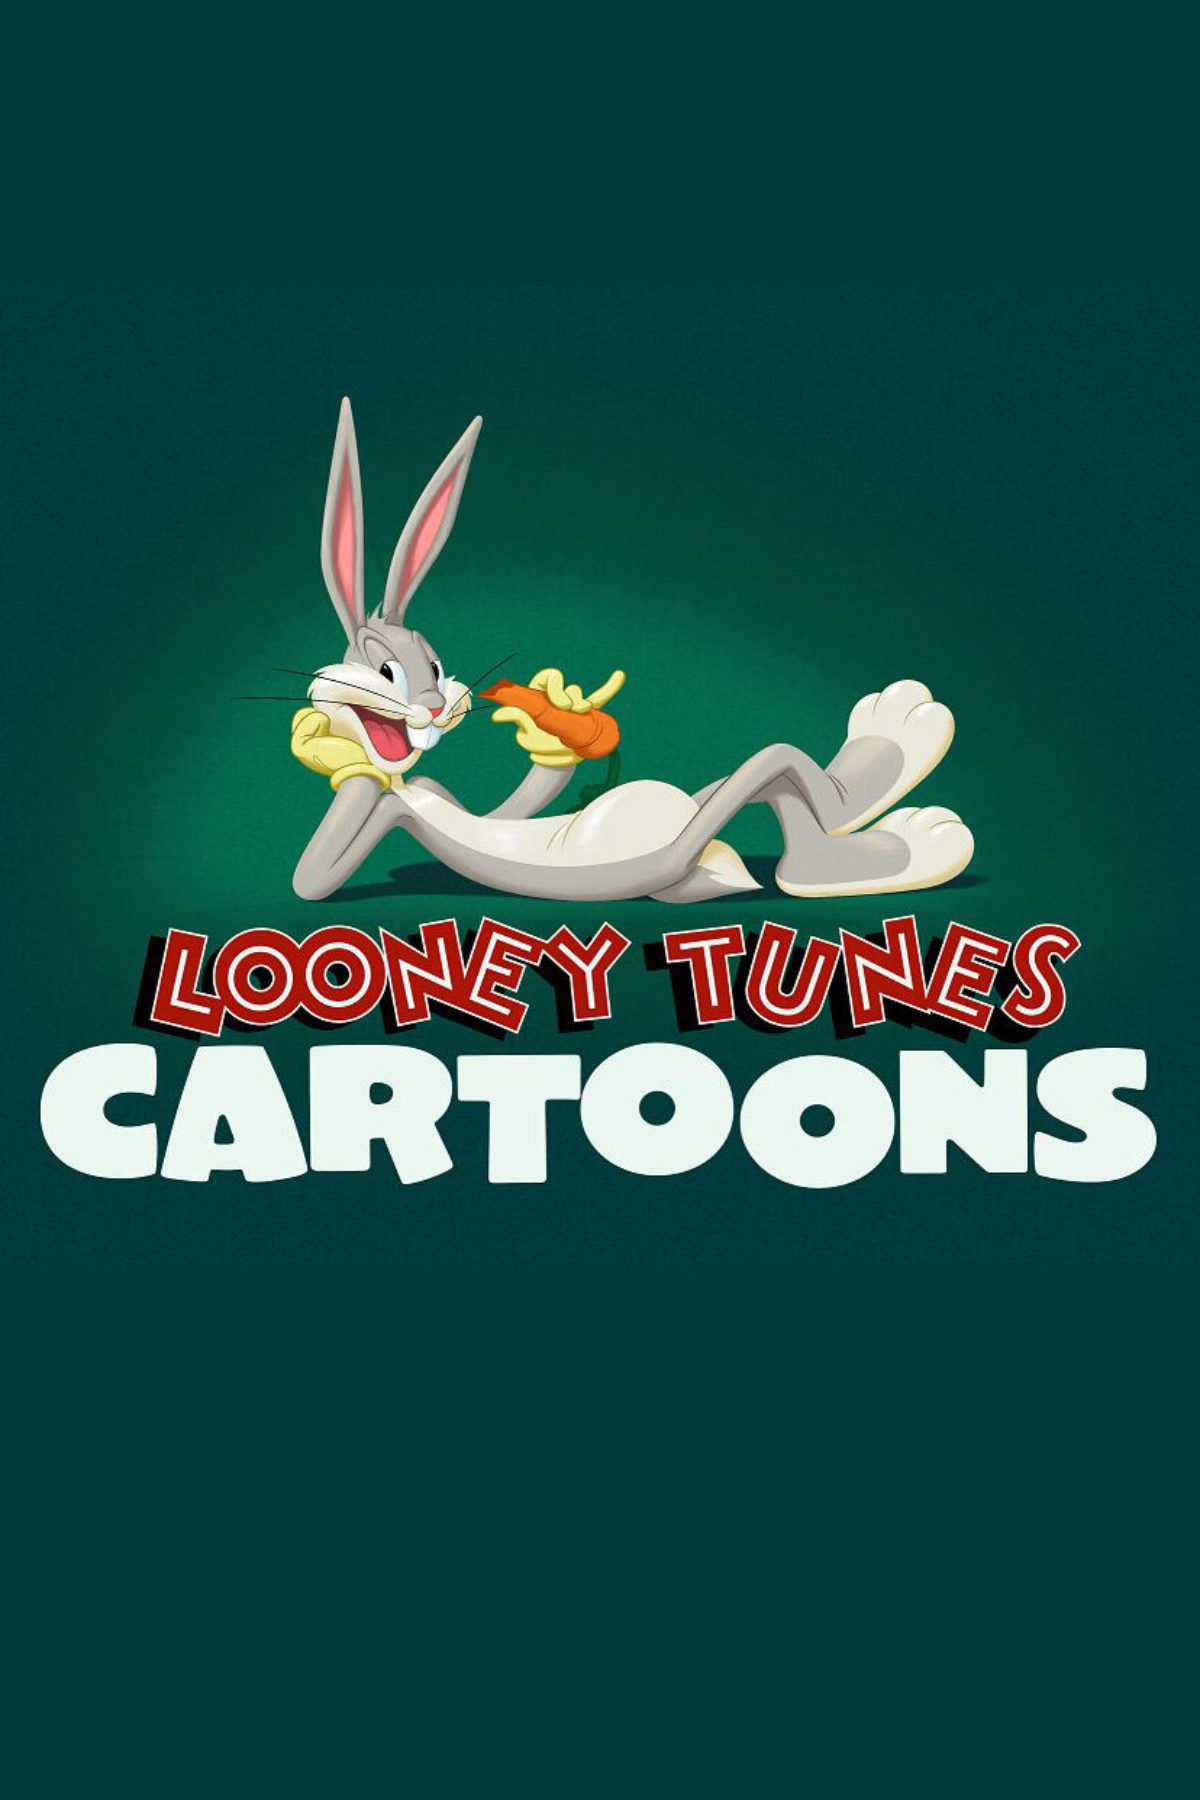 Looney Tunes Cartoons Season 1: Latest Updates! - DroidJournal